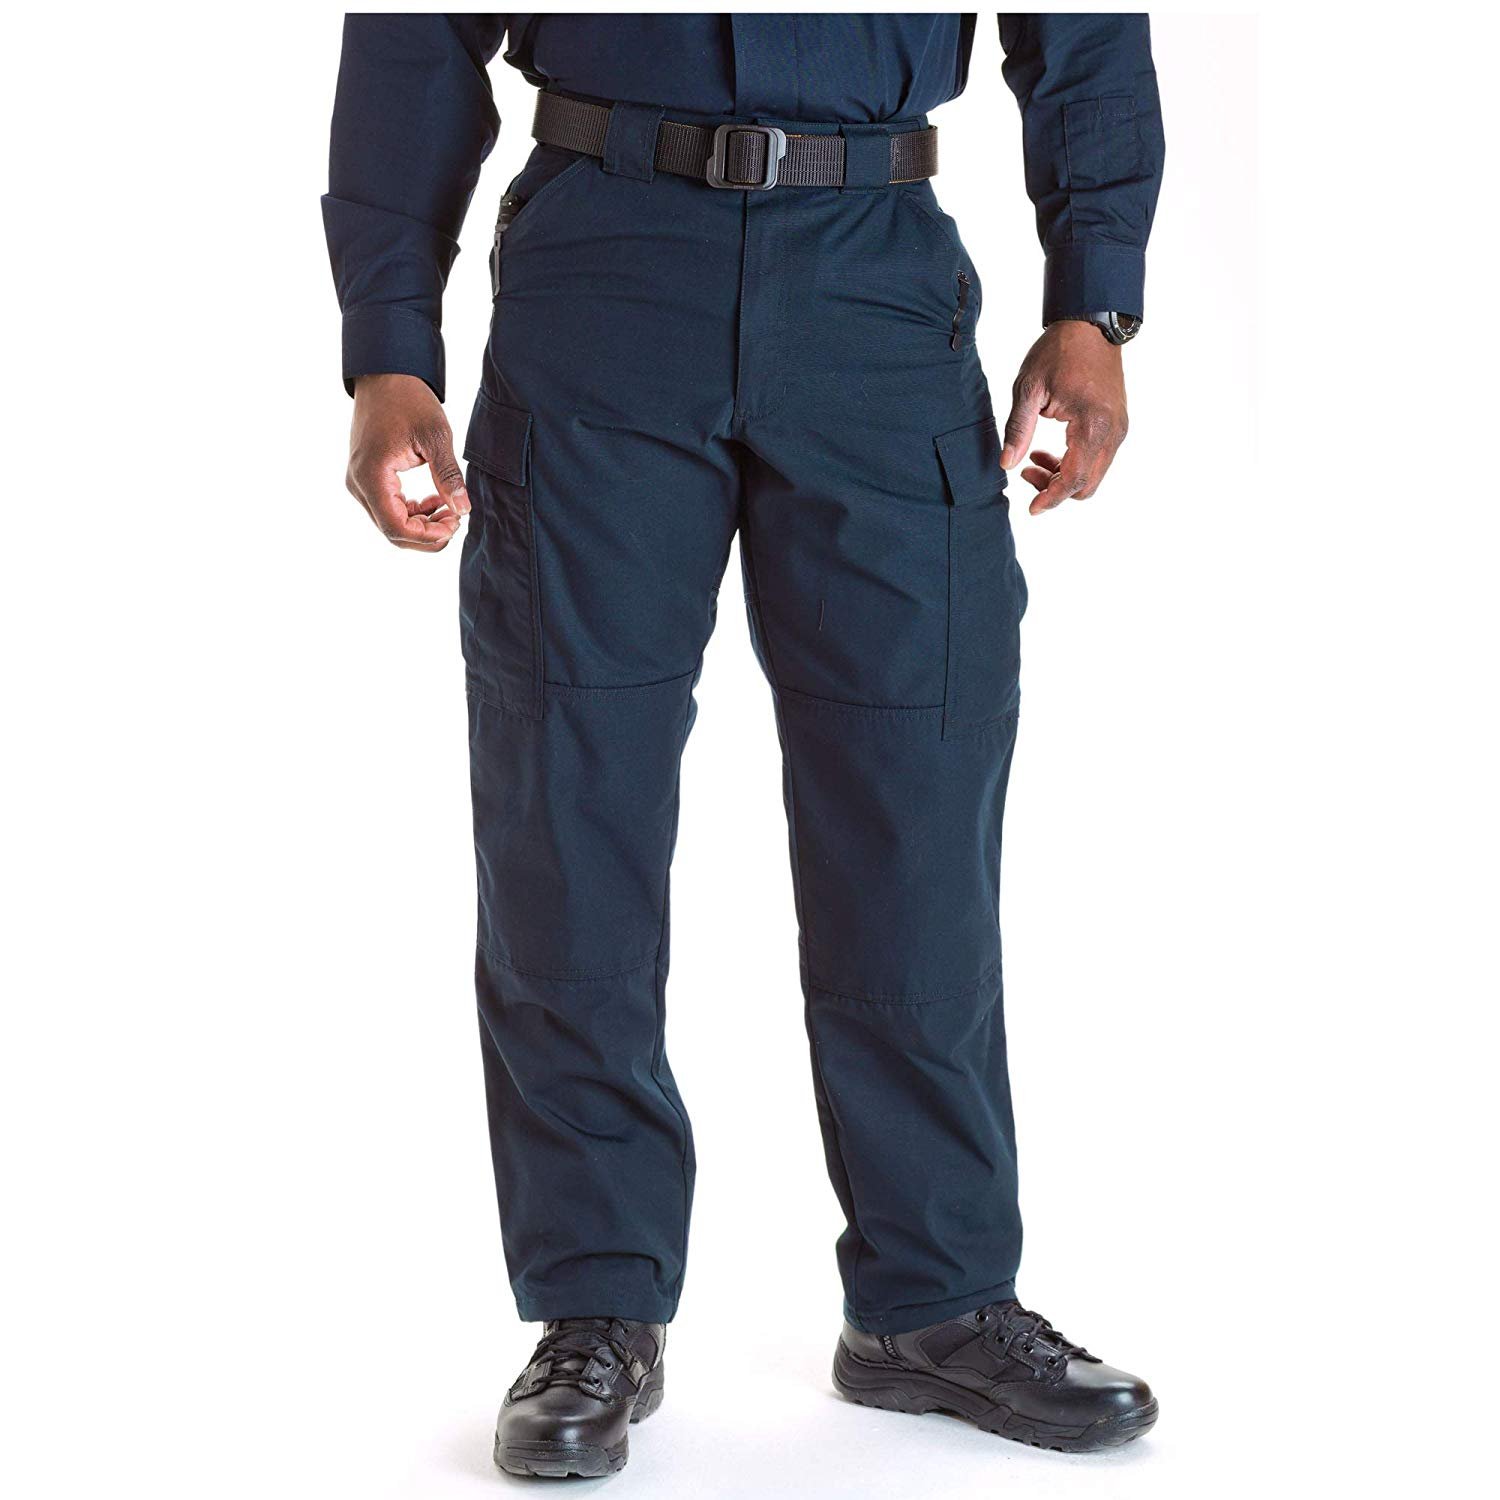 Men's Skinny Jean Cut Pants in Navy, Slim Fit Mens Jean Cut Pants